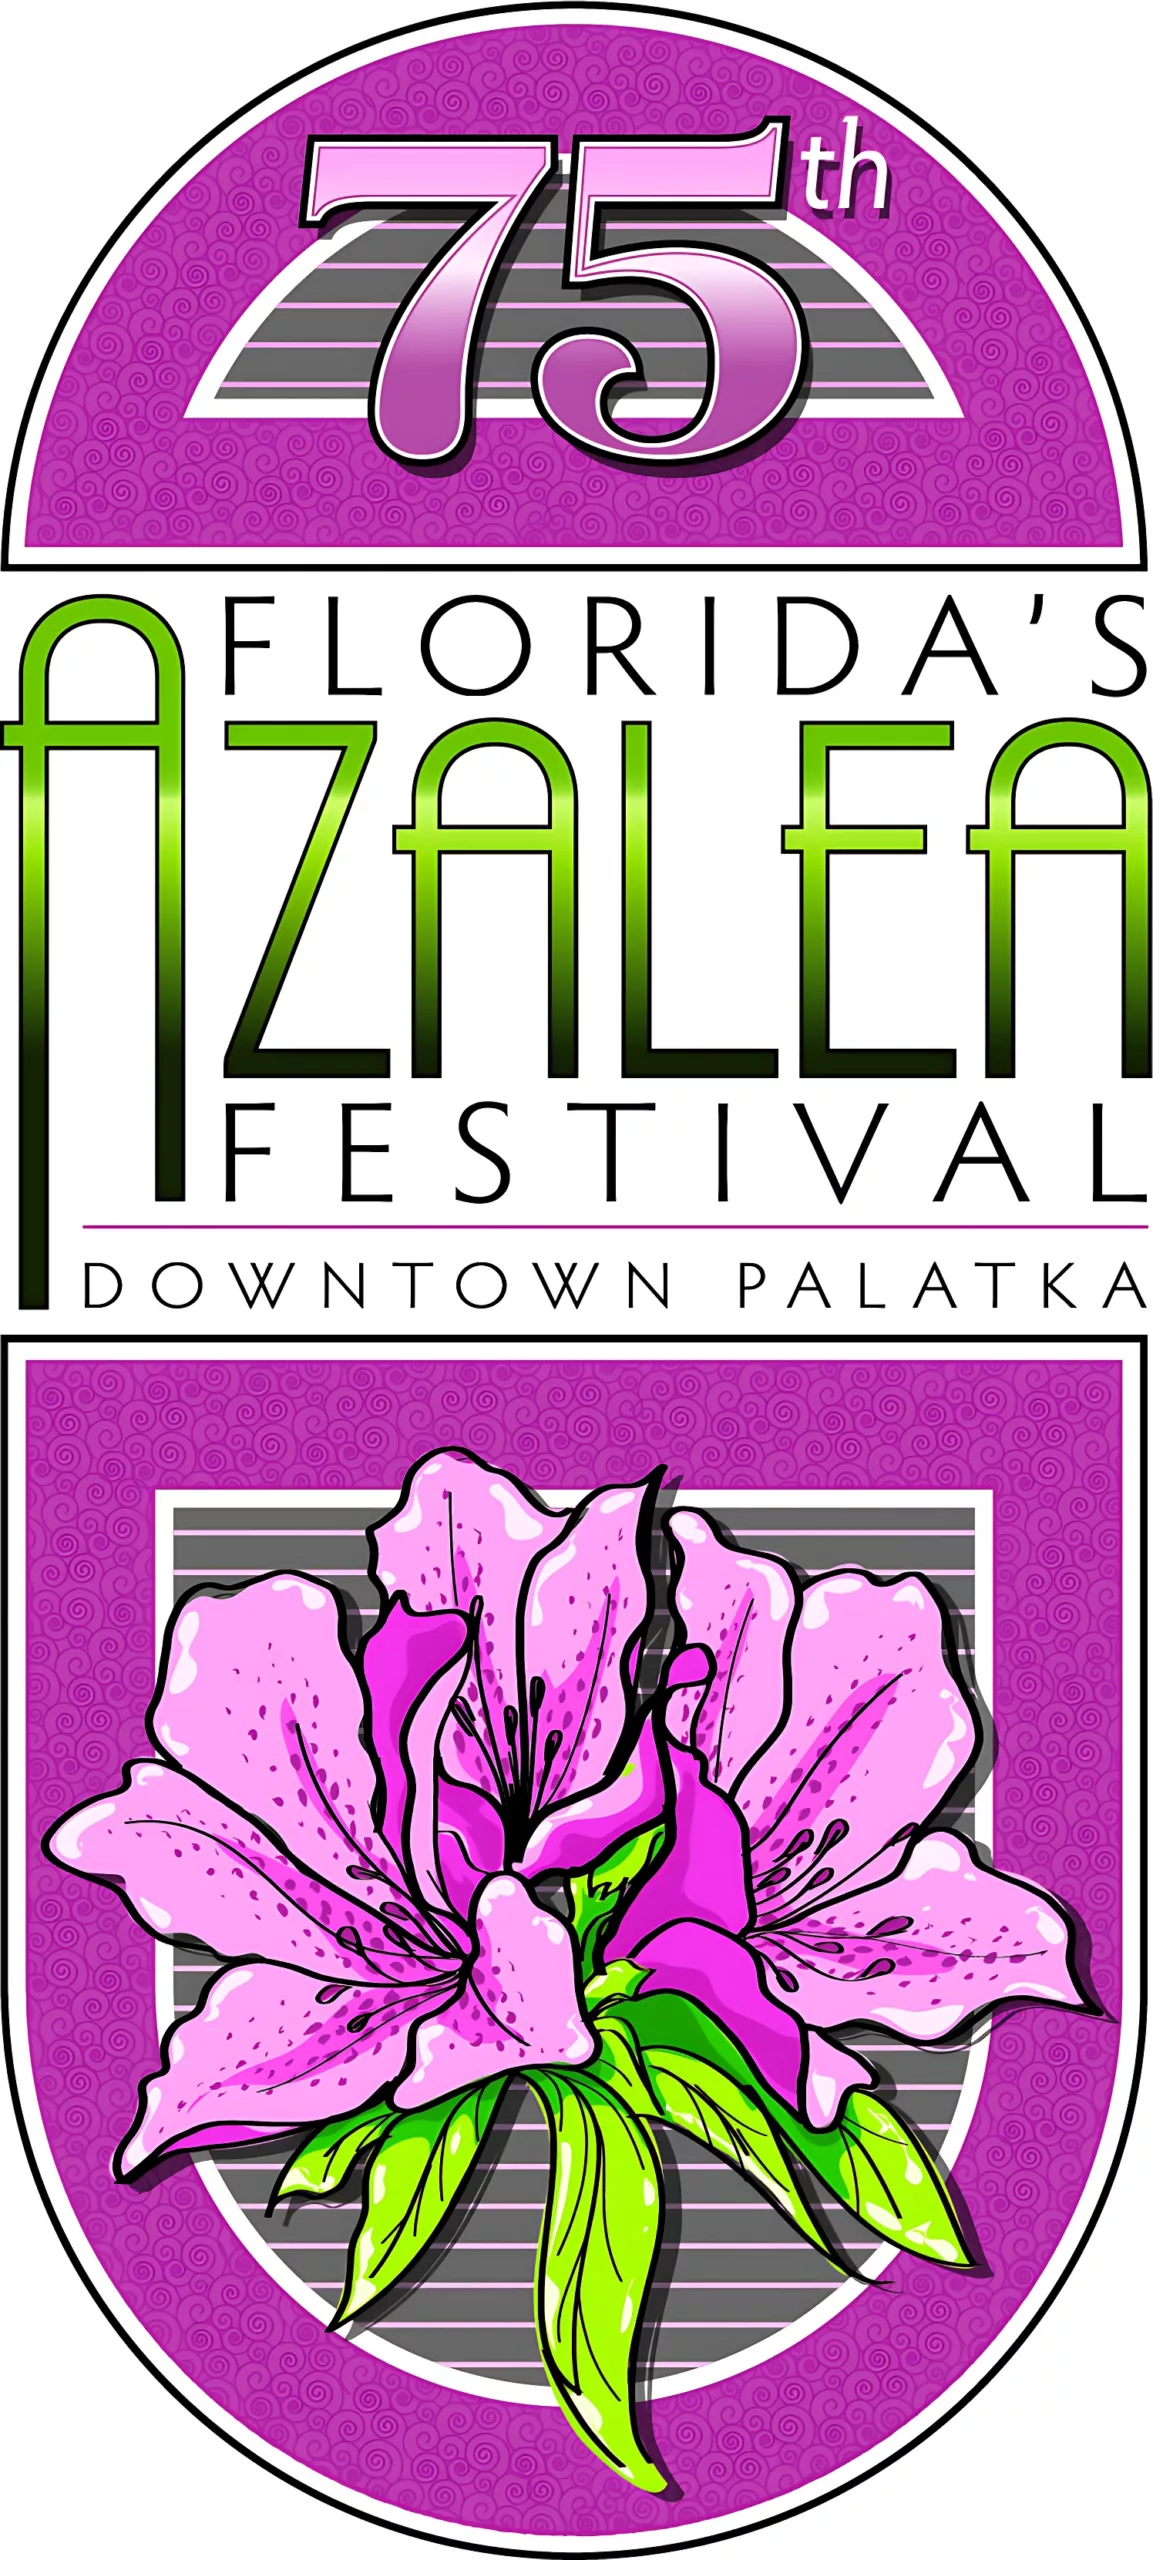 Booth Vendors Florida's 75th Azalea Festival Downtown Palatka